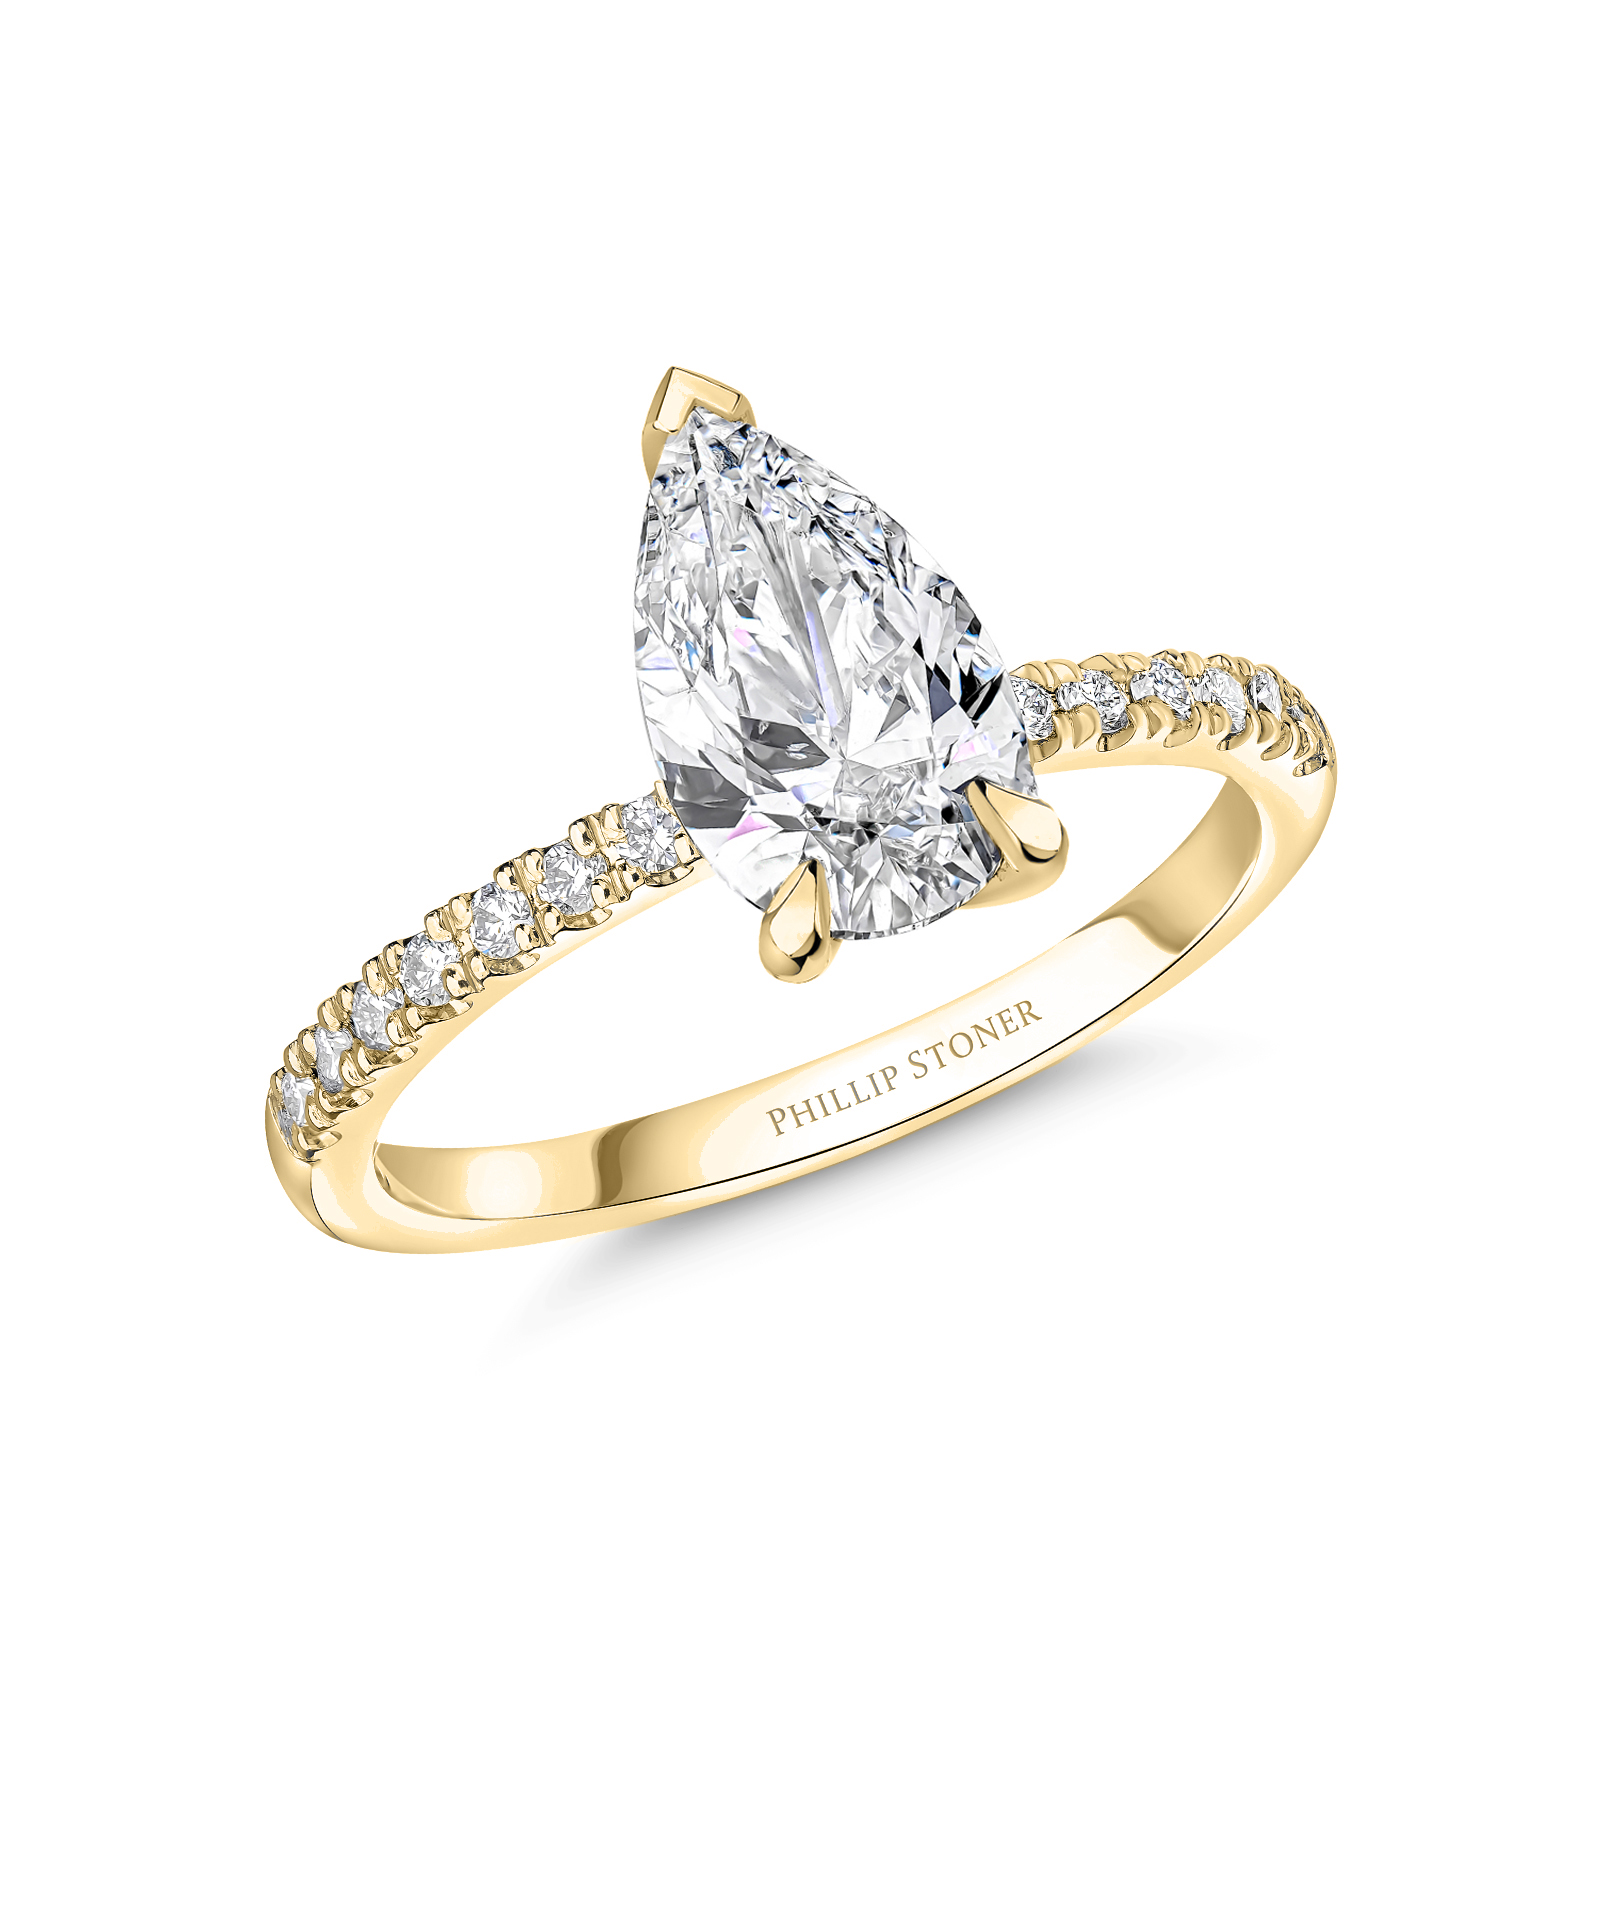 1ct Pear Cut Diamond Set Nova Yellow Gold Engagement Ring - Phillip Stoner The Jeweller